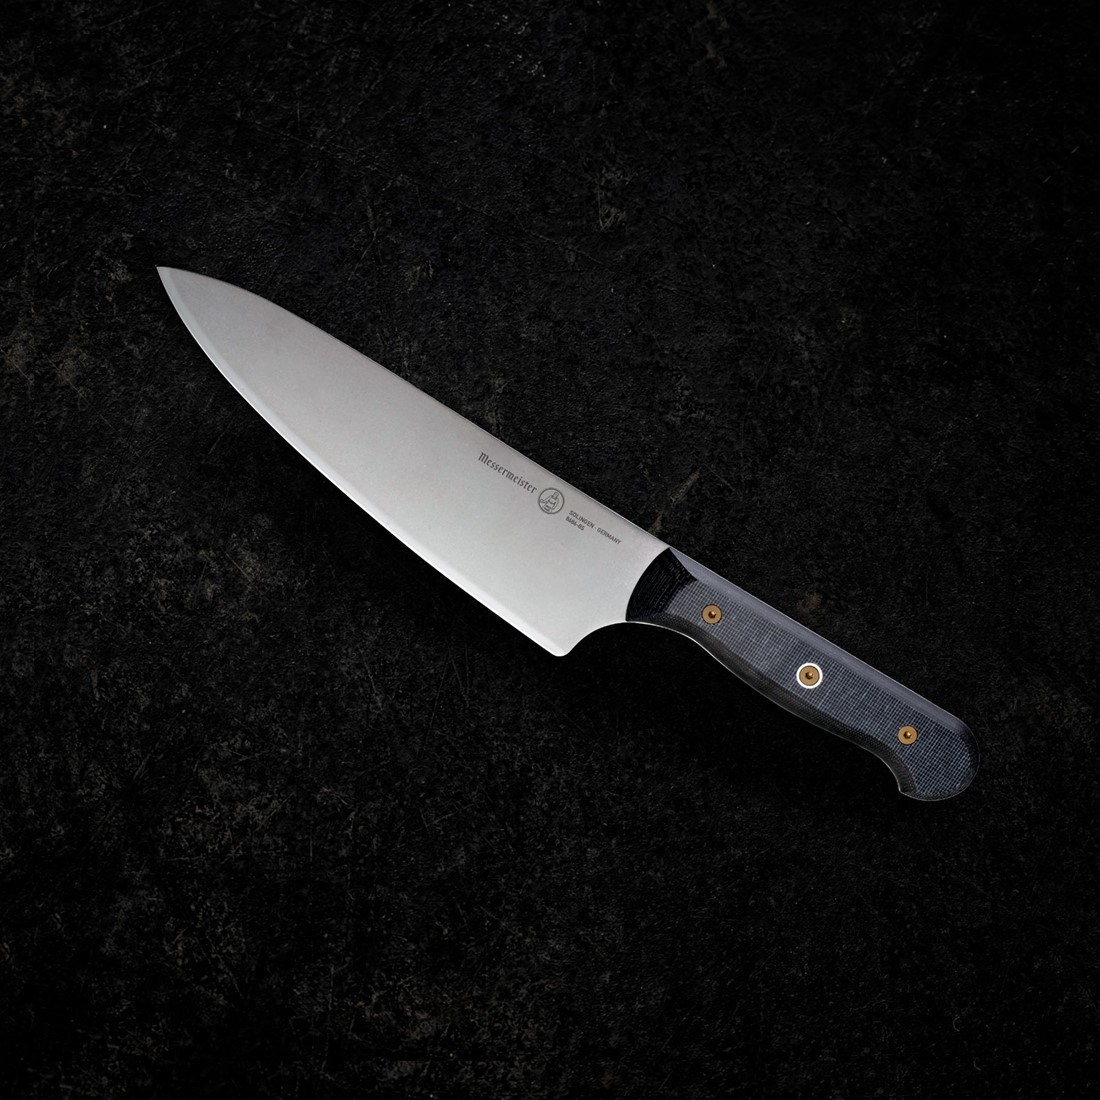 https://www.messermeister-europe.com/resize/1_2570013184068.jpg/0/1100/True/messermeister-custom-8-inch-chef-s-knife.jpg